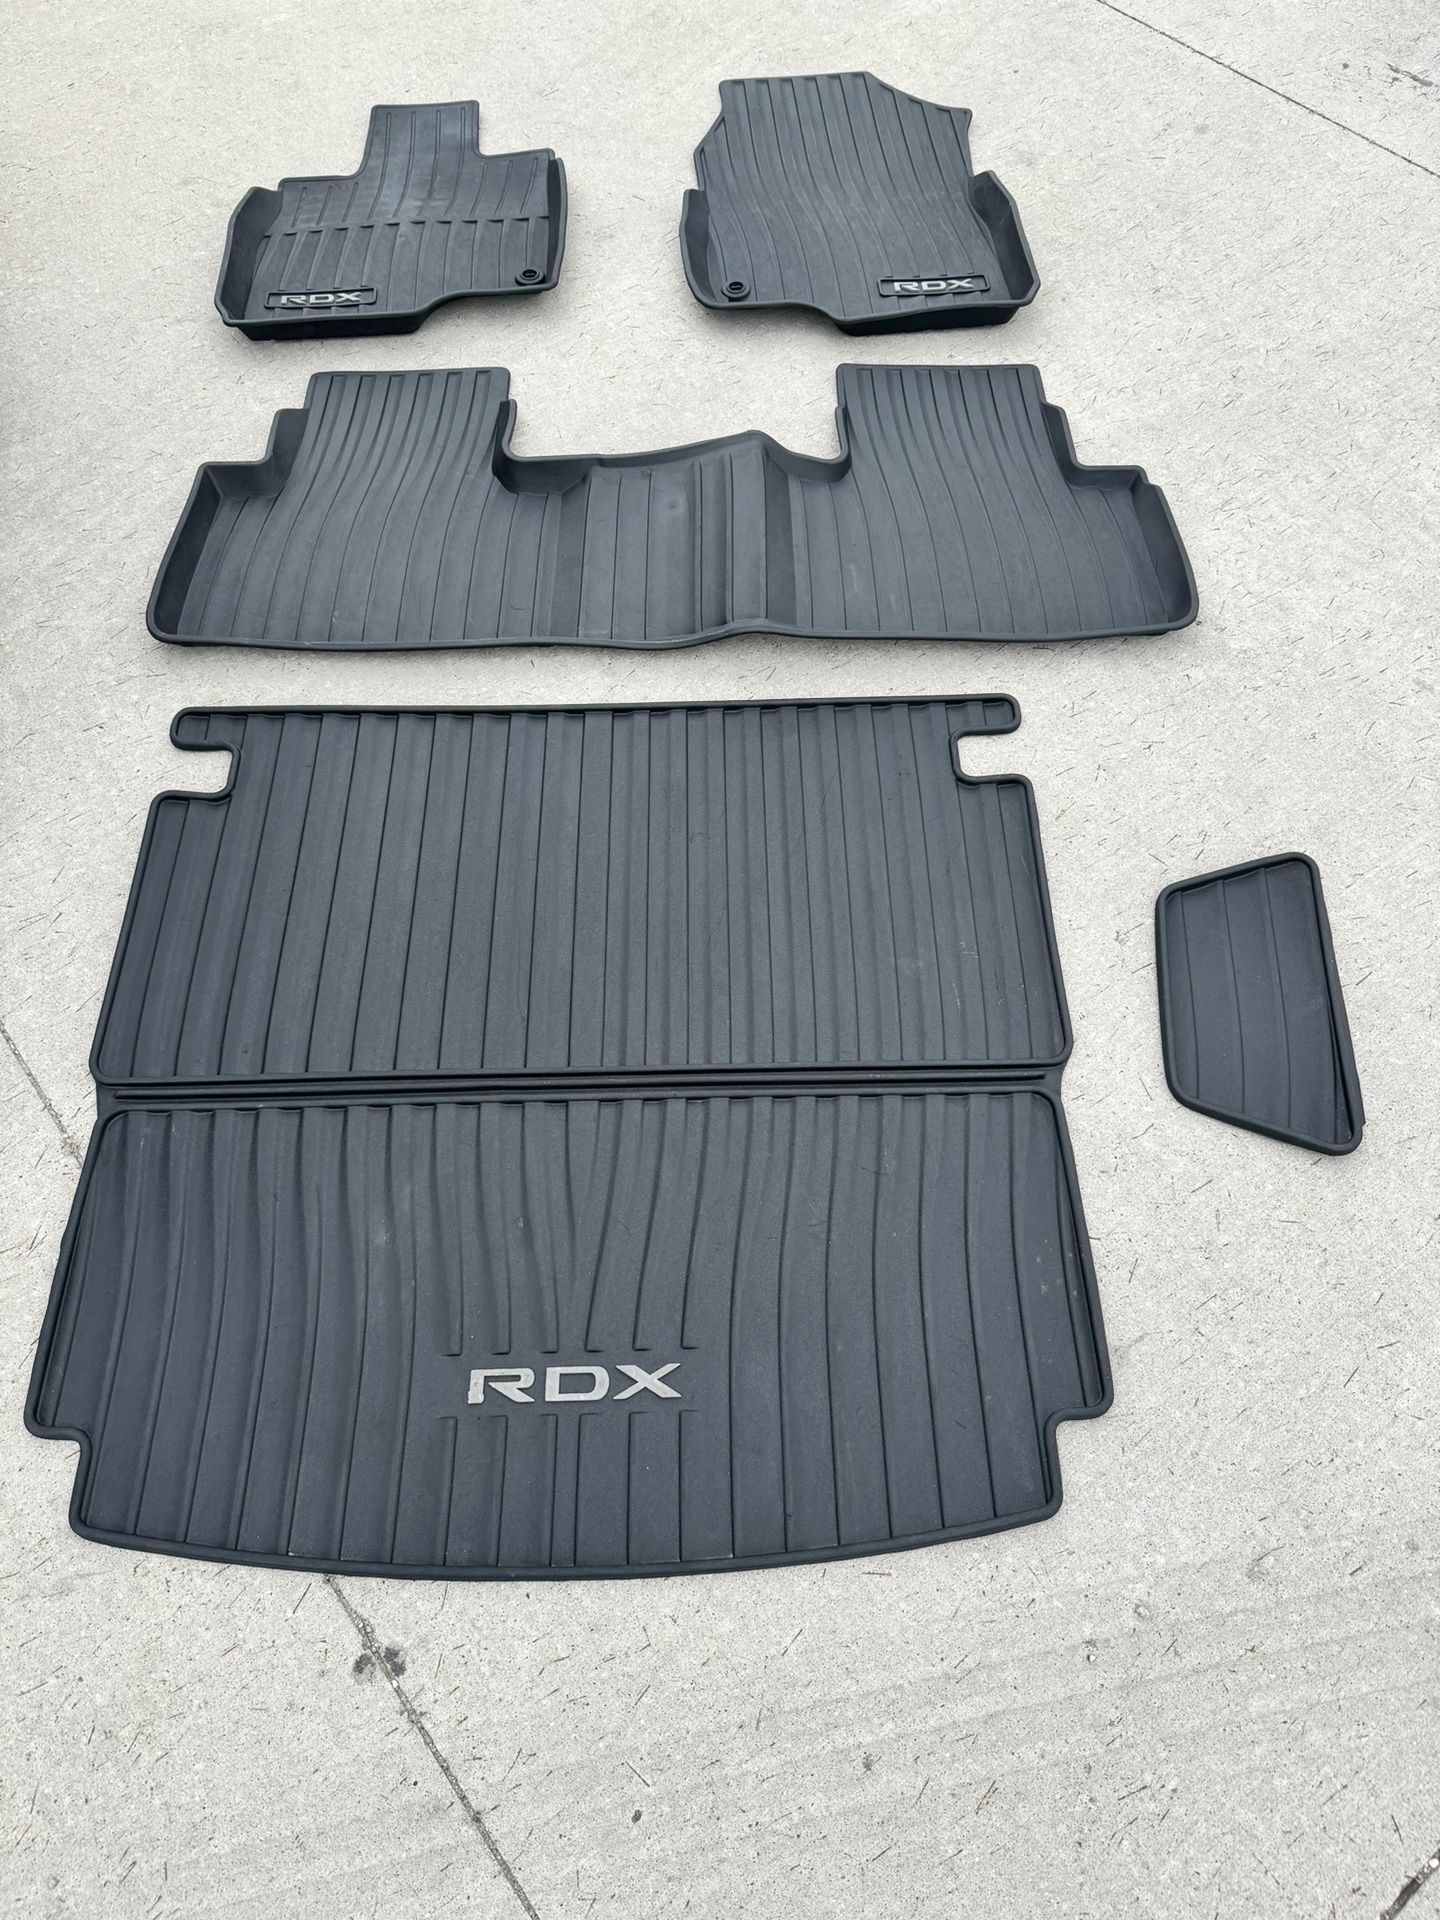 Acura RDX rubber floor mats (Full set)